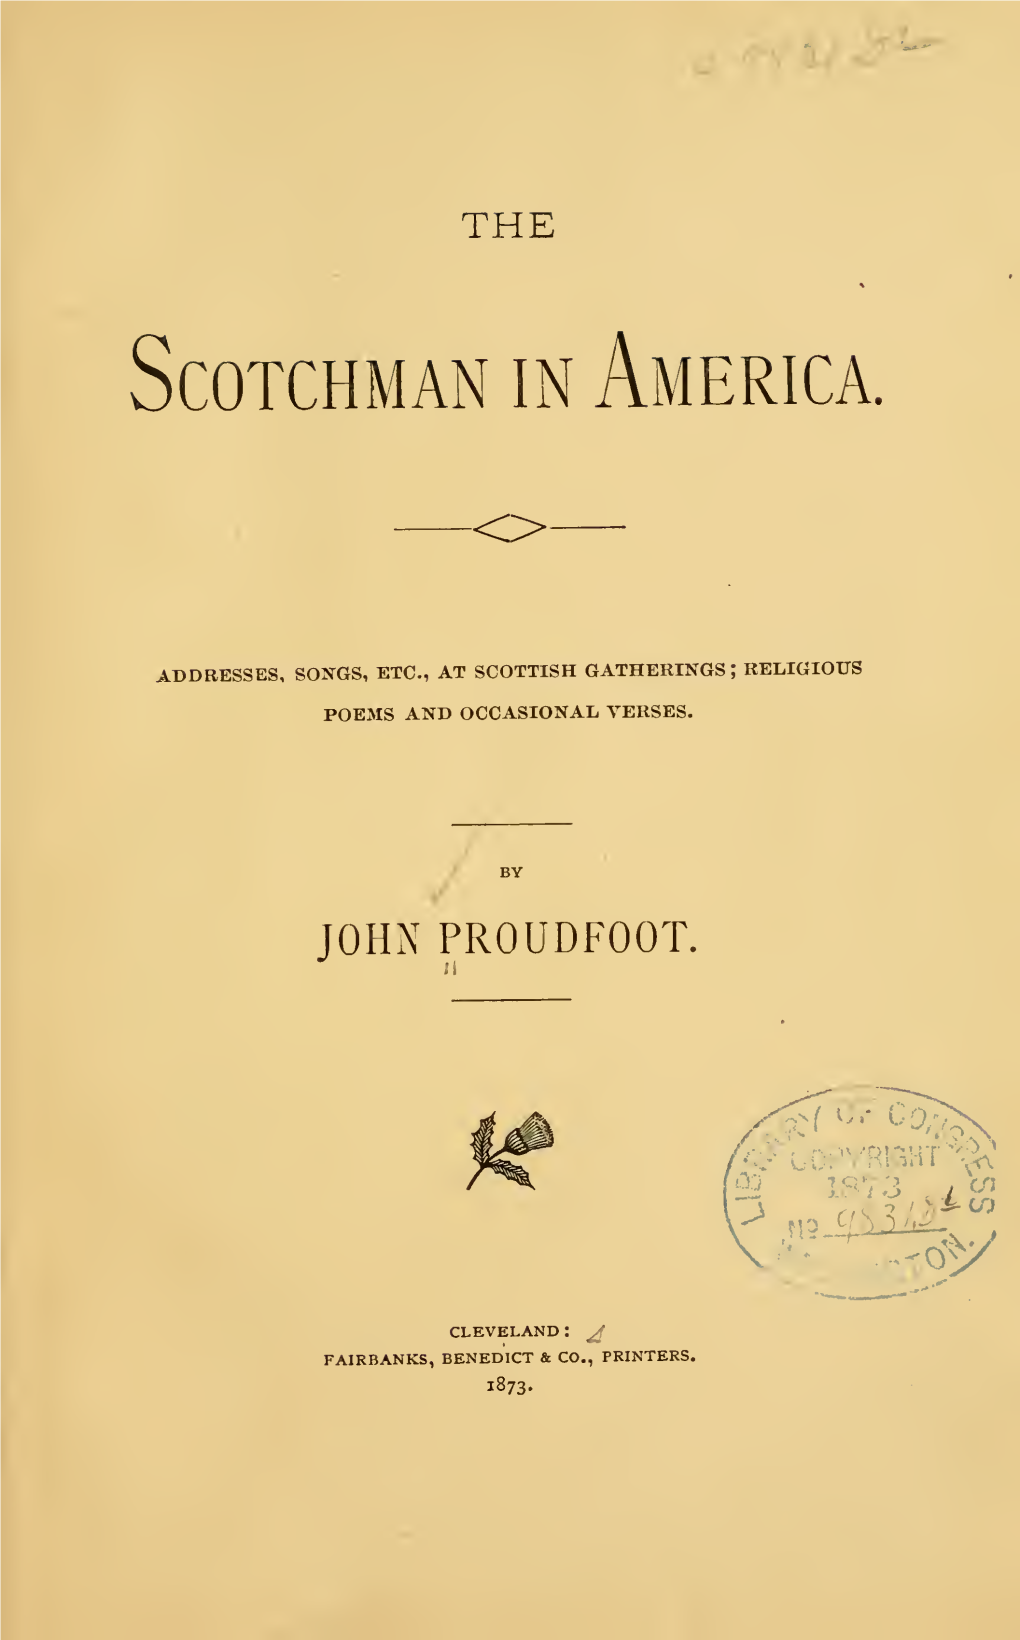 The Scotchman in America